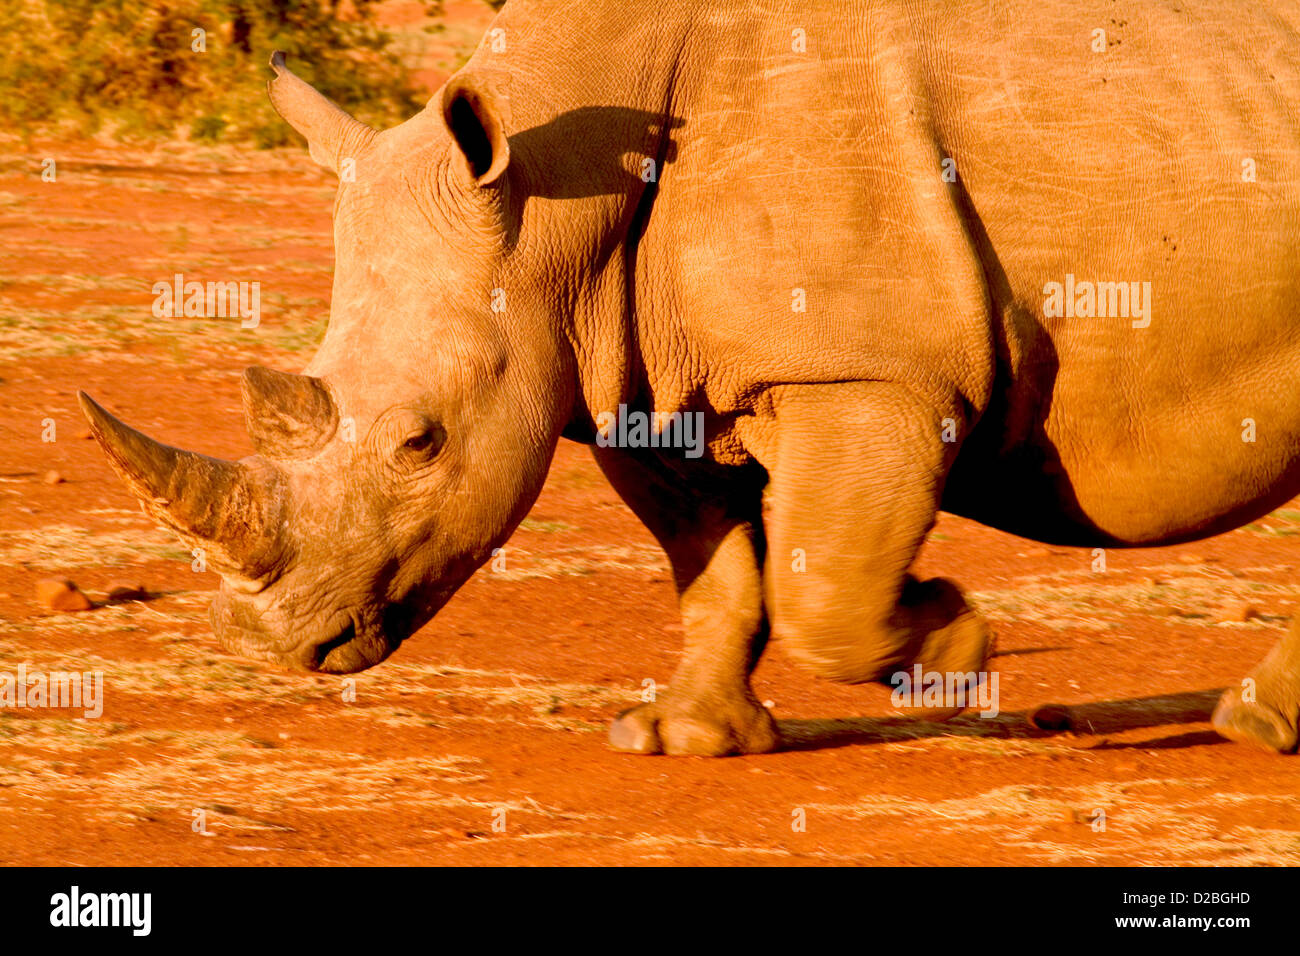 Sud Africa, Parco Nazionale Kruger. Raro rinoceronte bianco Foto Stock